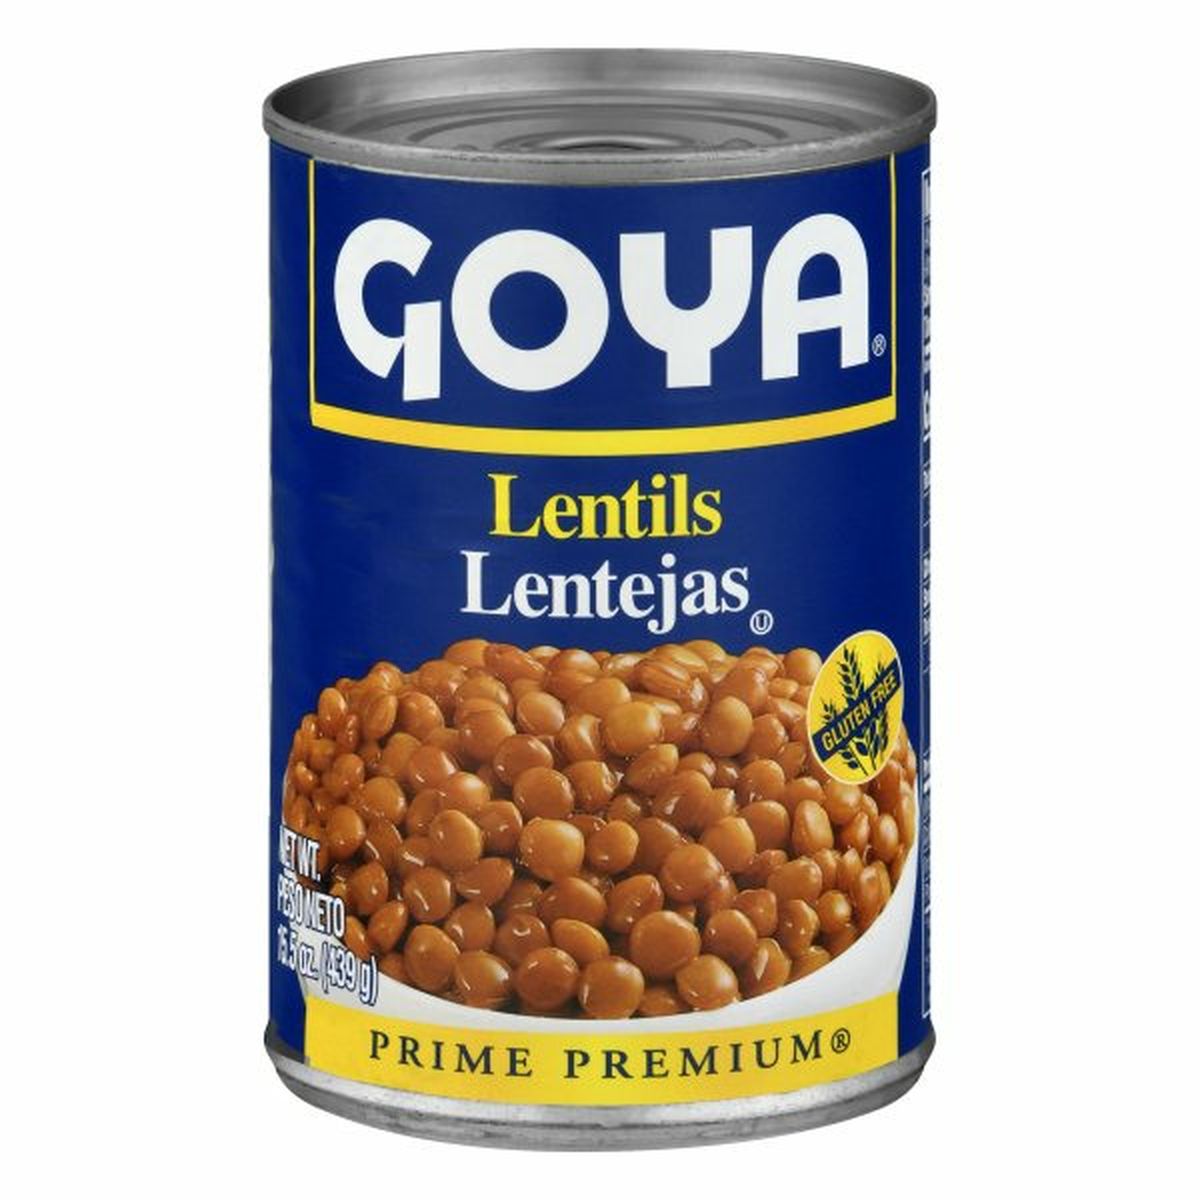 Calories in Goya Lentils